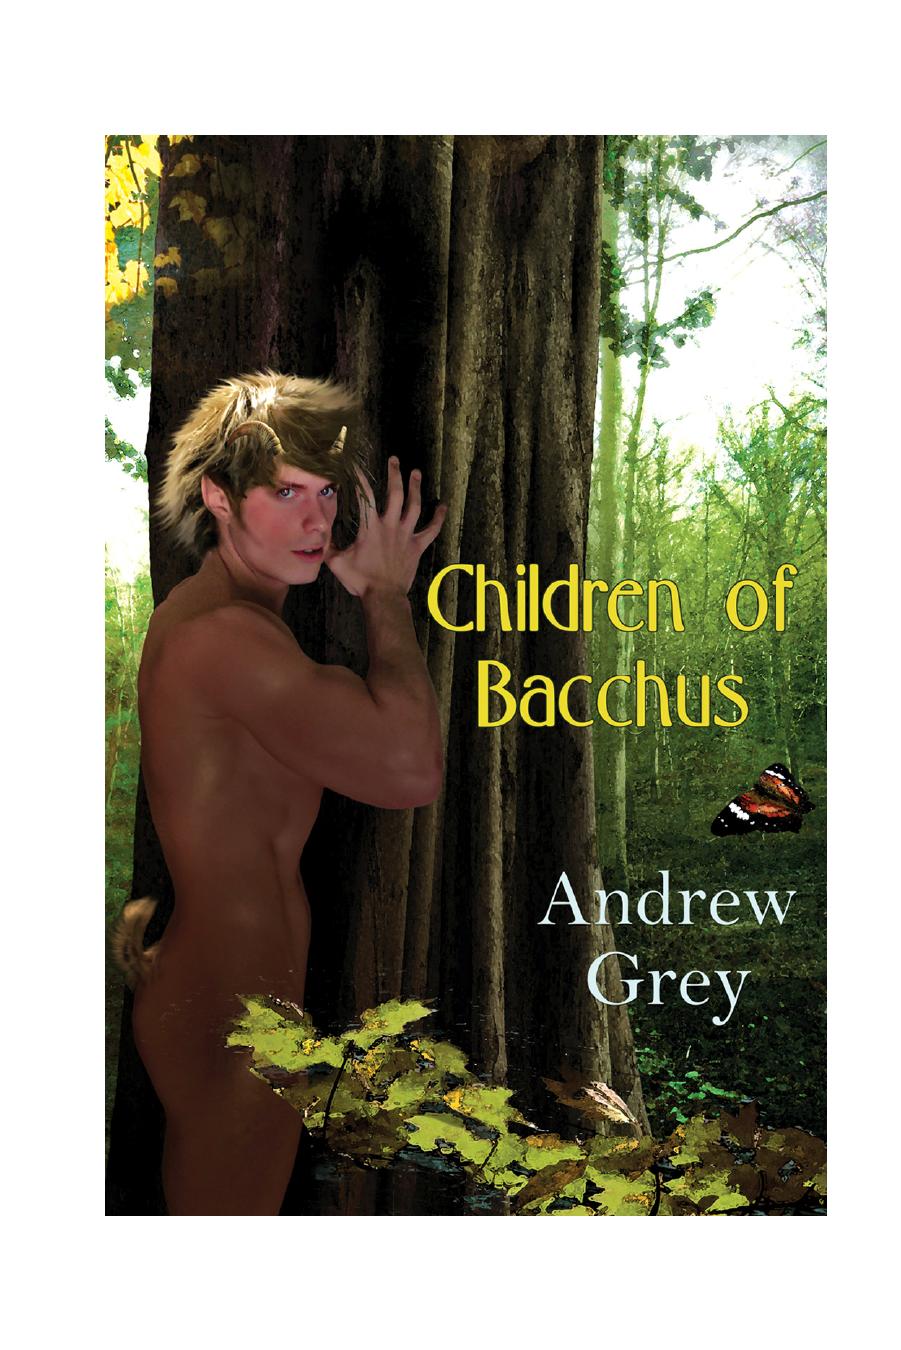 Children of Bacchus by Andrew Grey